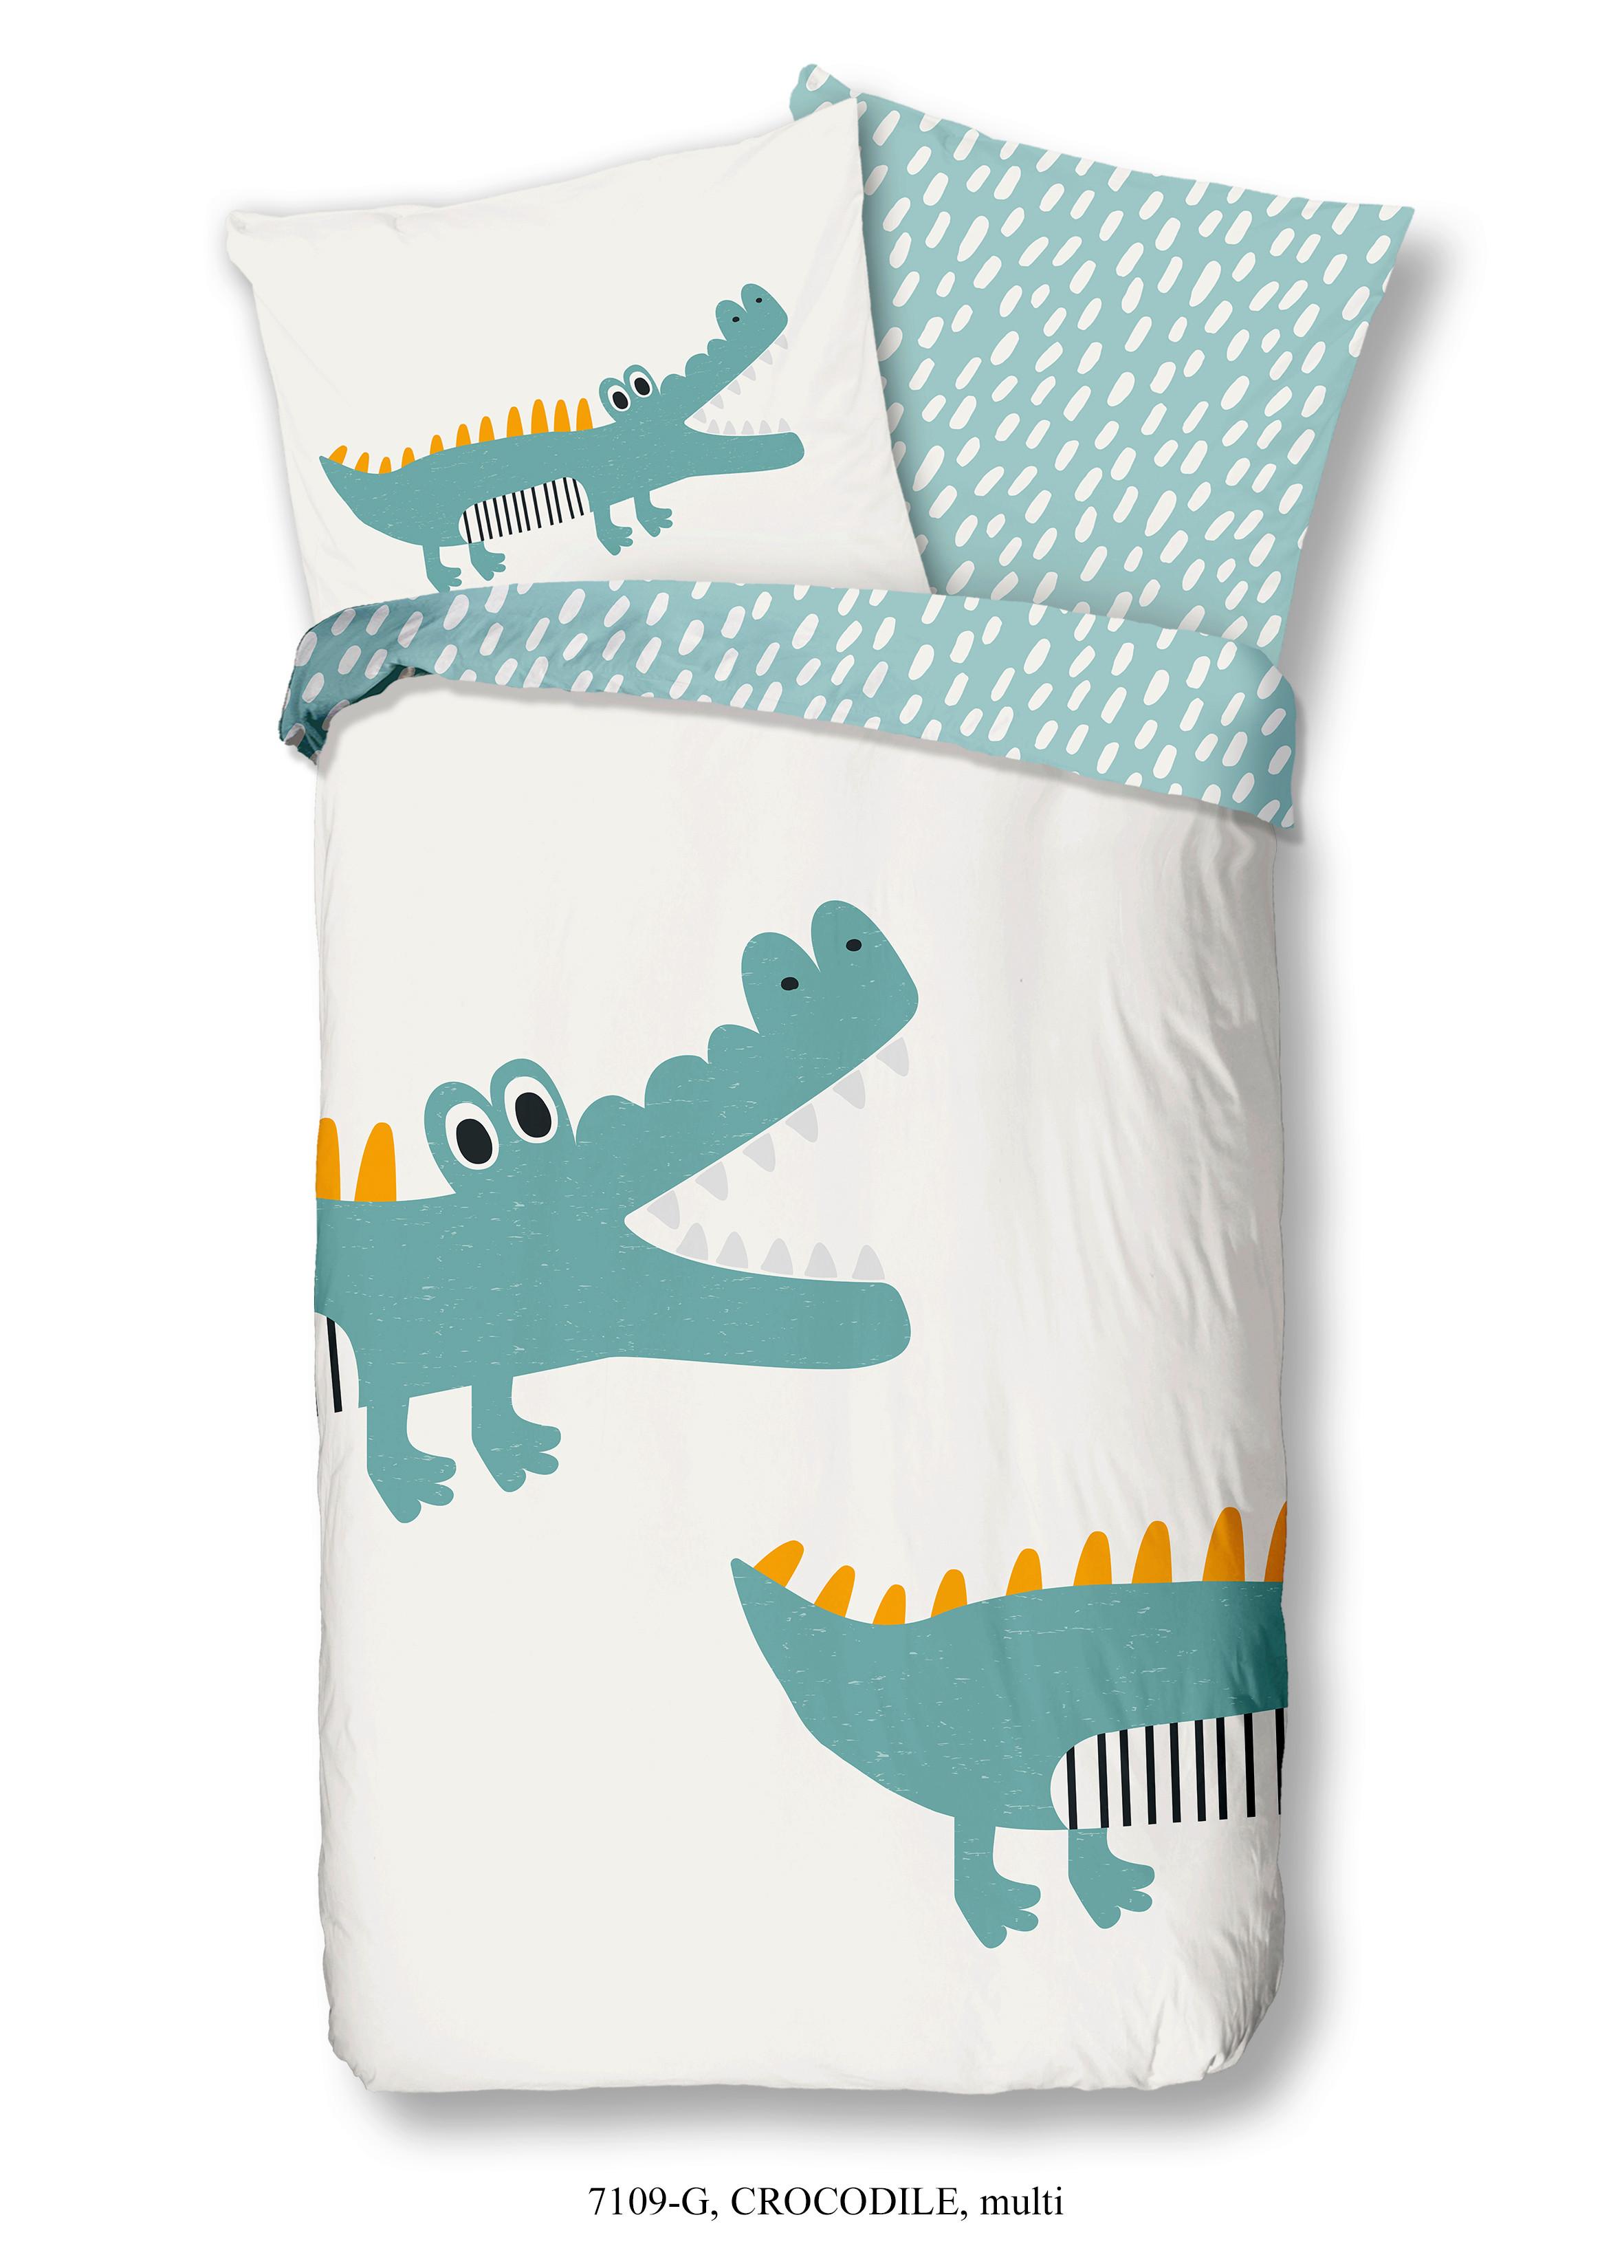 Wende-Kinderbettwäsche Krokodil ca. 135x200cm - Blau/Weiß, Textil (135/200cm) - MID.YOU